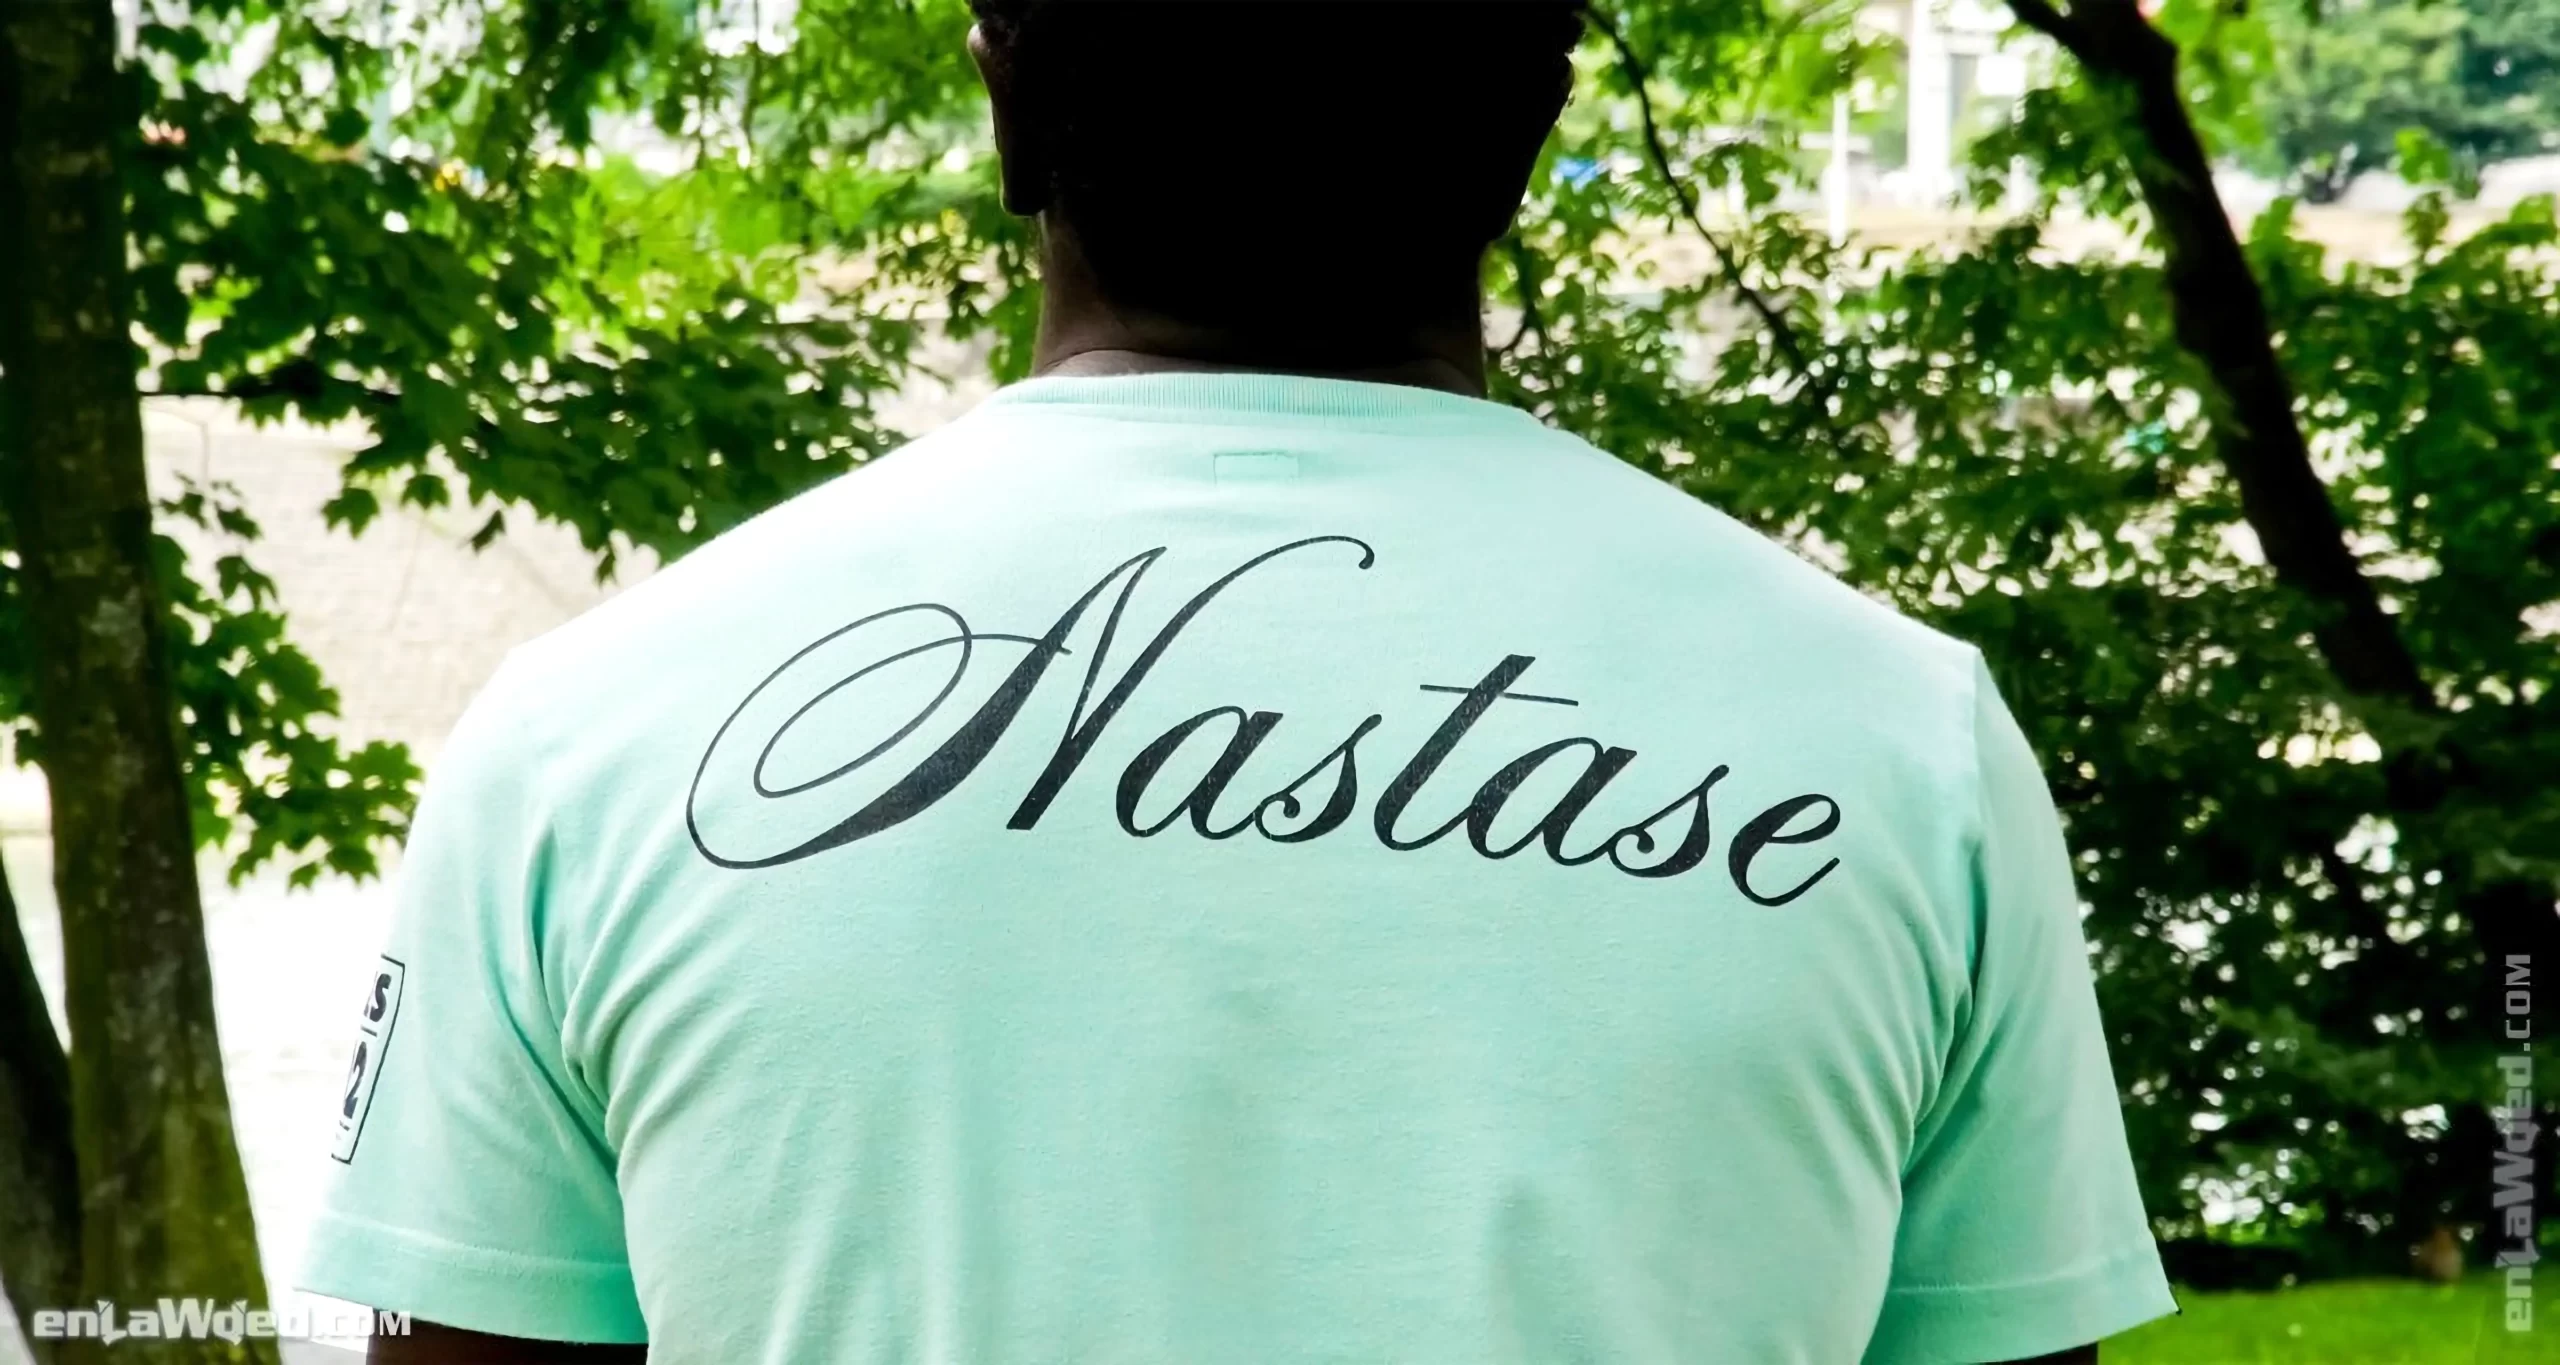 Men’s 2006 Ilie Nastase Player’s Club T-Shirt by Adidas: Stoic (EnLawded.com file #lmchdixr48wfpe2ojov)